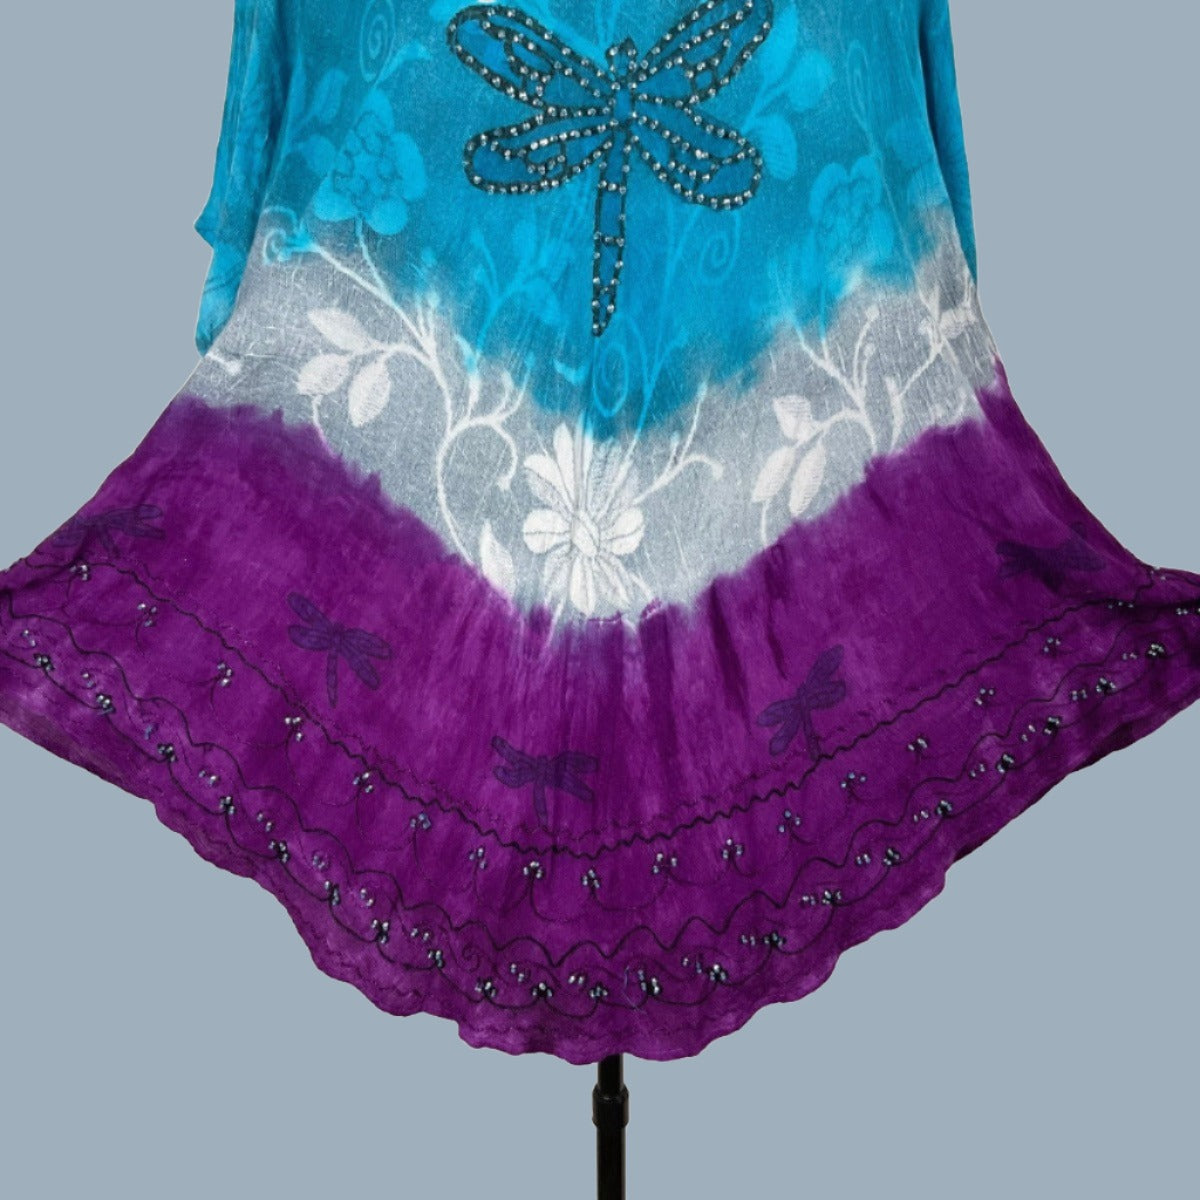 Women's Tunic Blouse - Purple & Light Blue Dragonfly - PLUS SIZE - Flowy Design